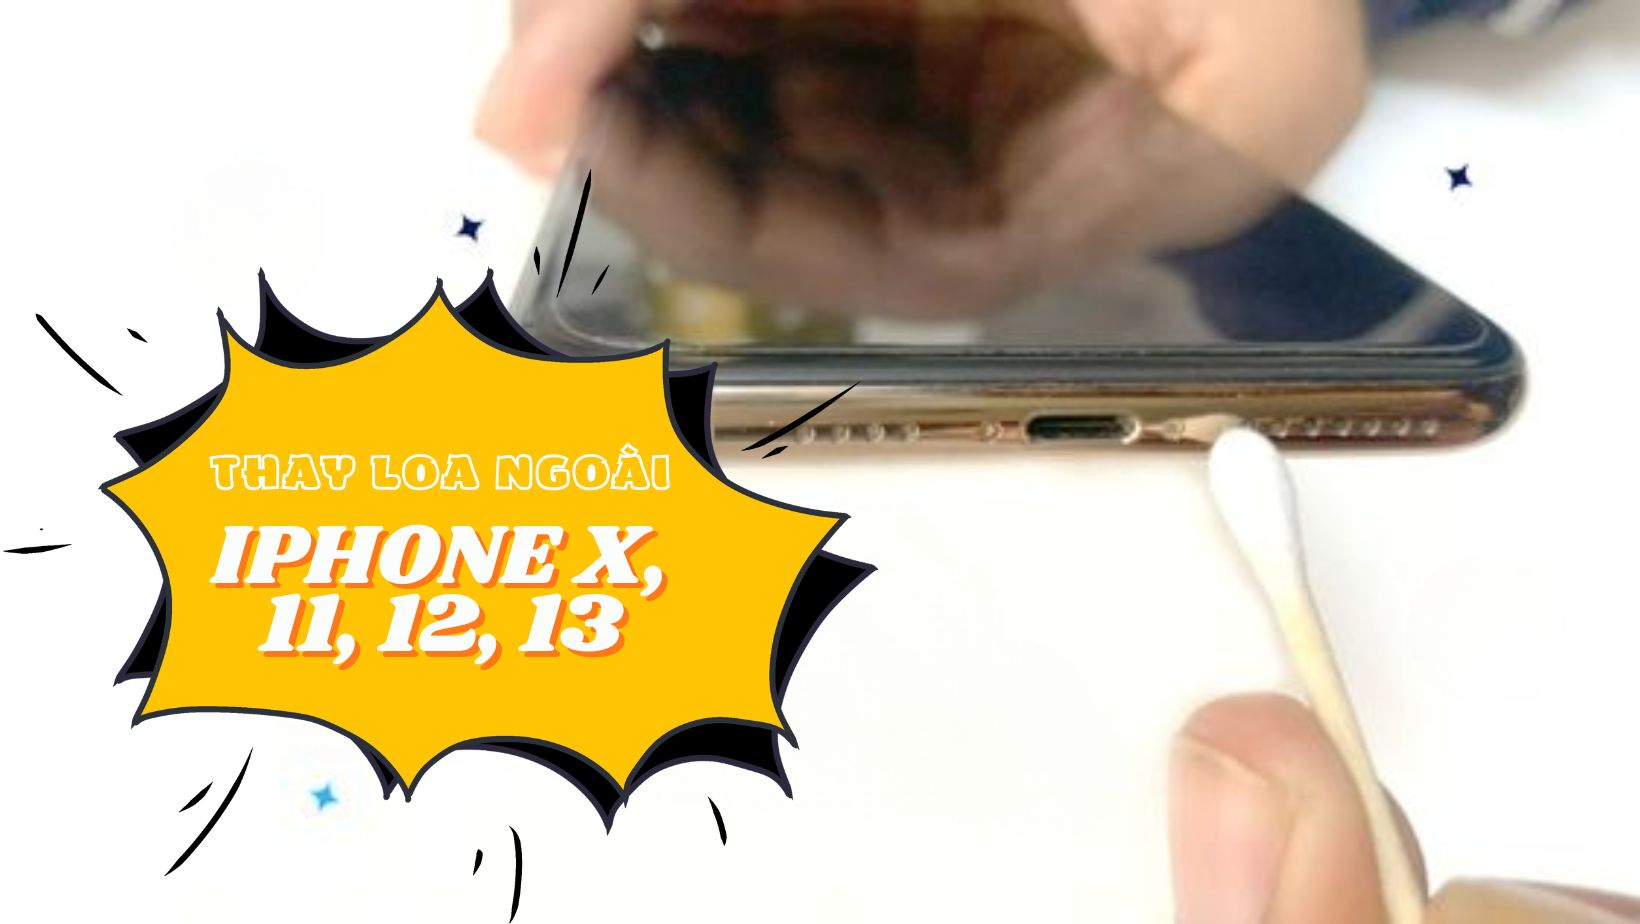 Thay Loa Ngoài iPhone X, Giá Thay Loa Trong | Loa Ngoài iPhone 11, 12, 13 Pro Max